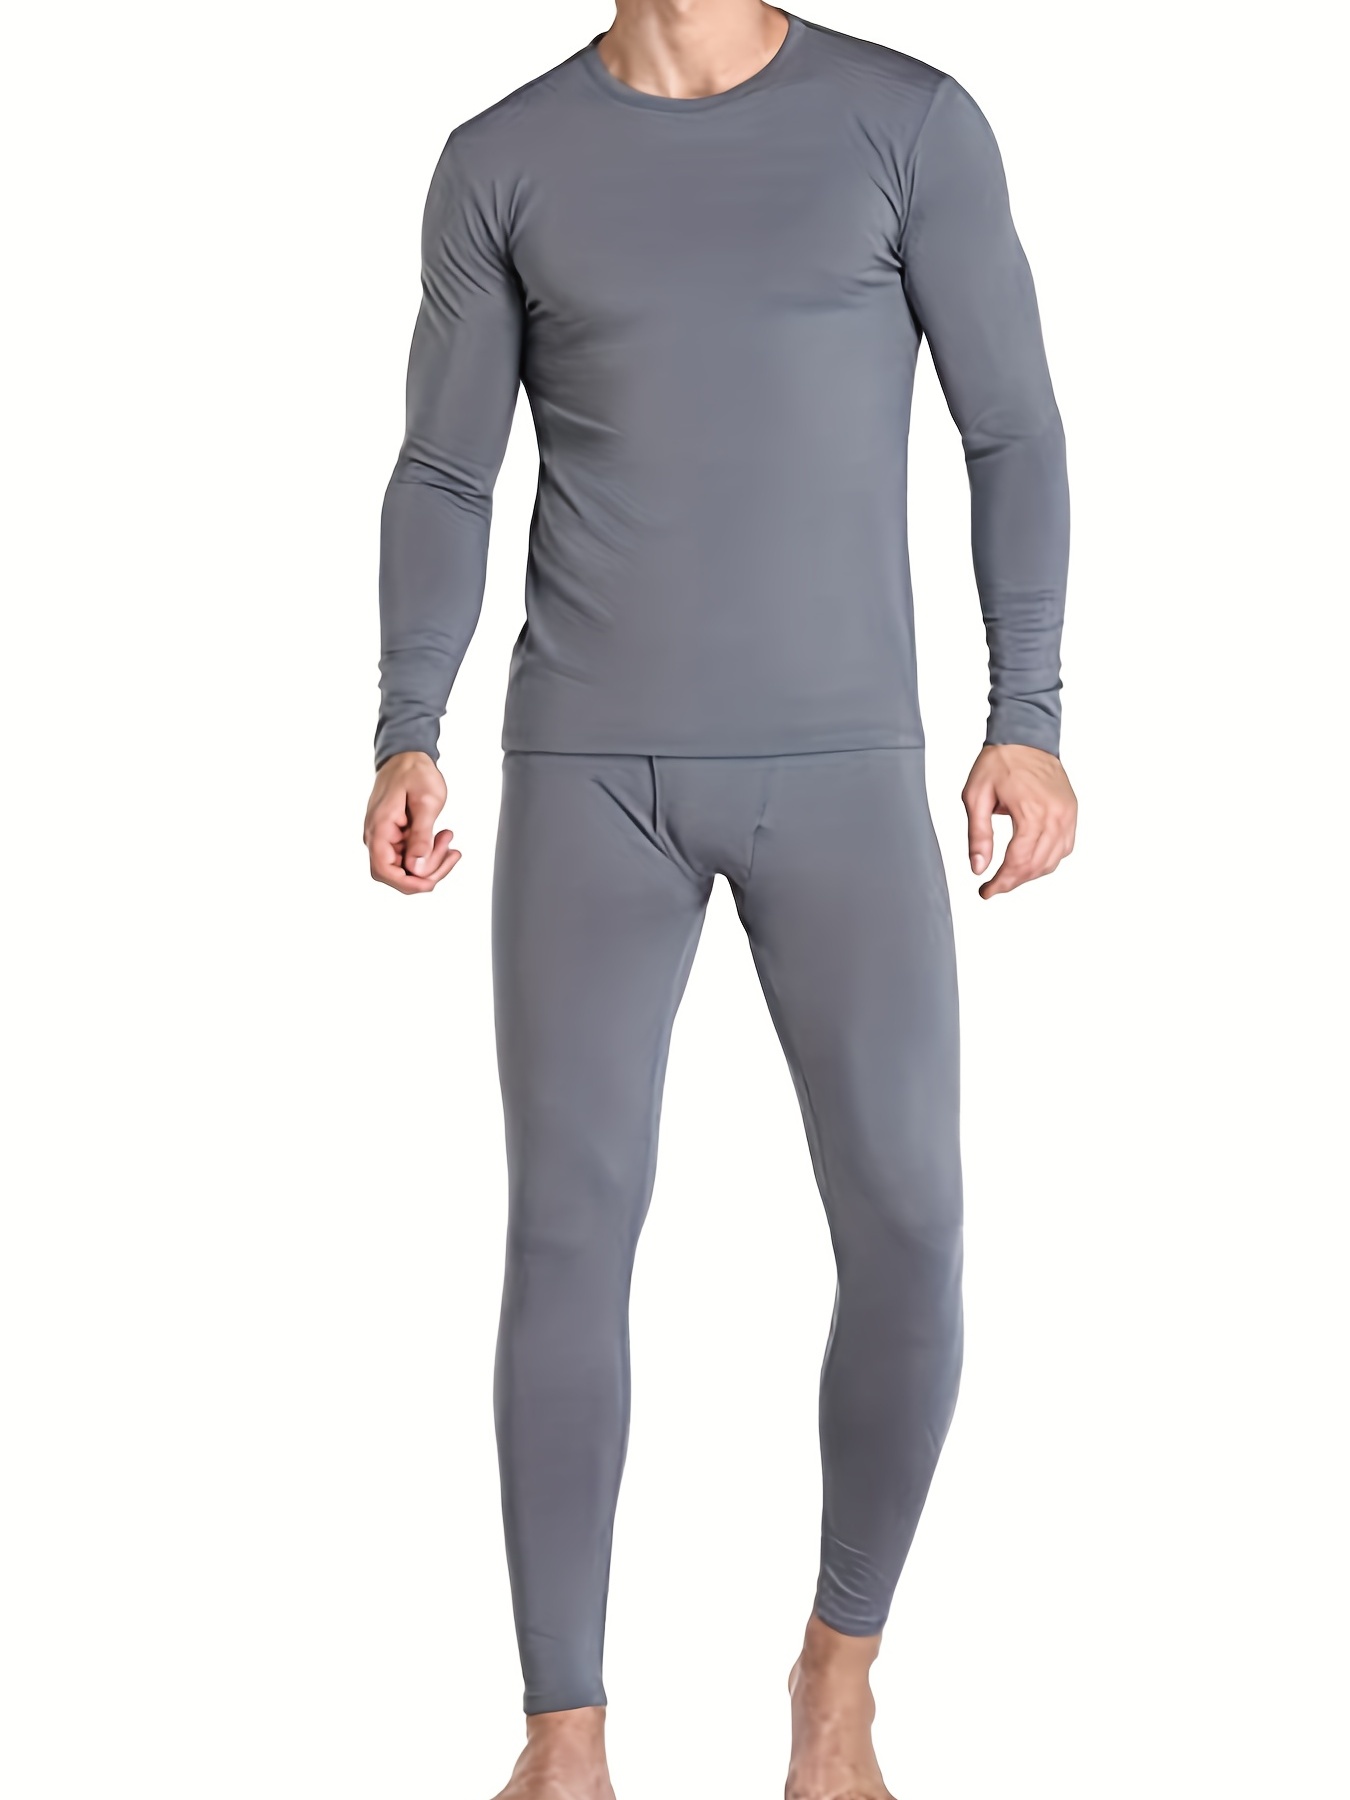 Men's Long John Thermal Underwear, Base Layer Sets